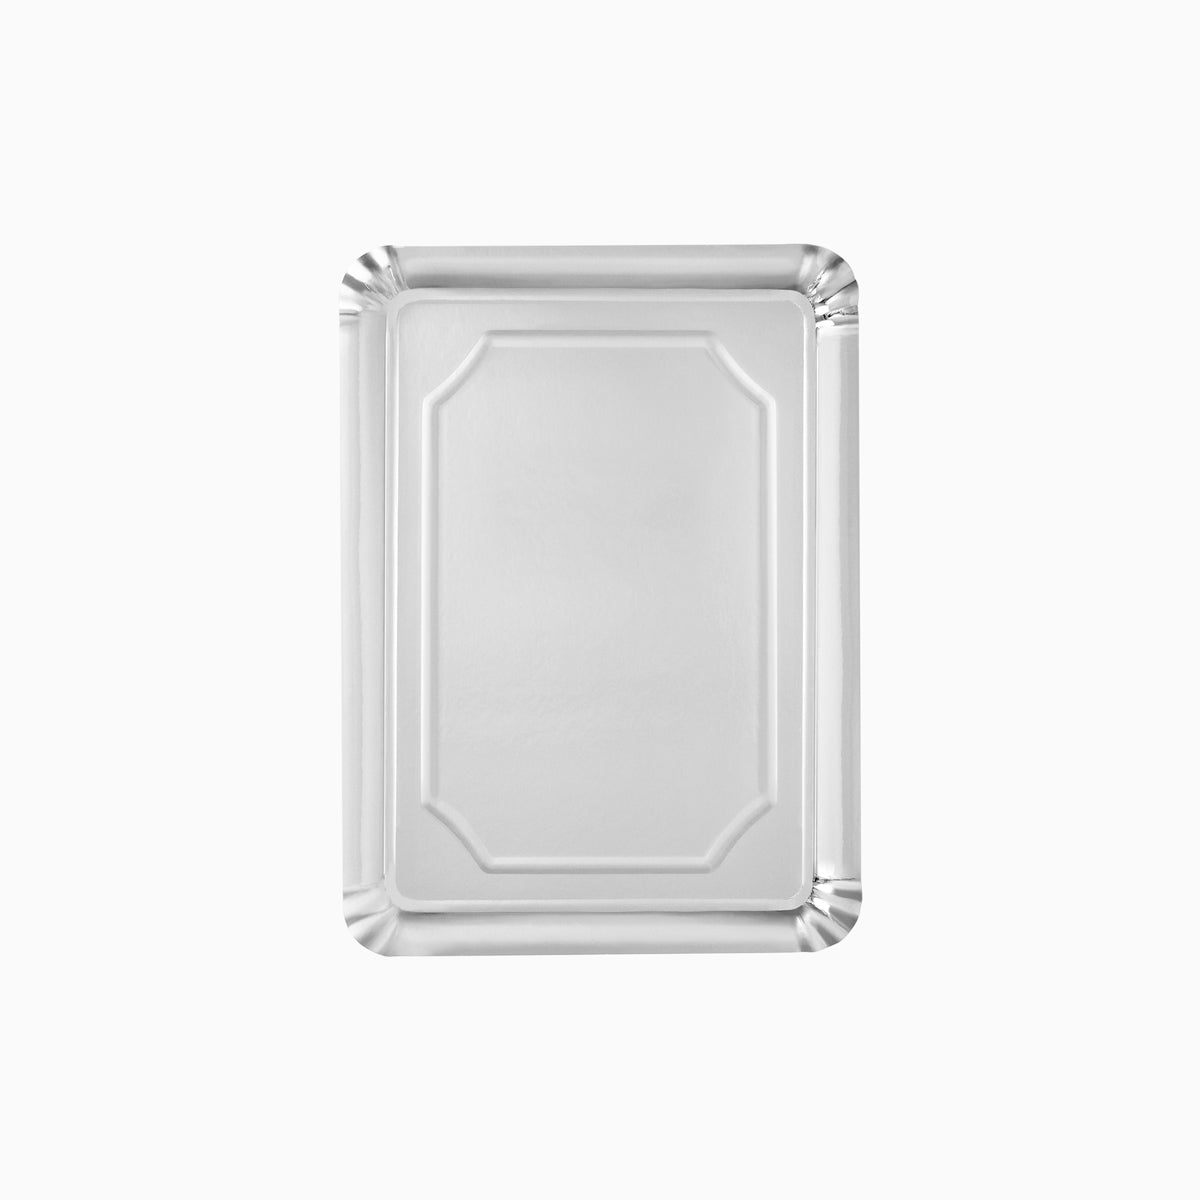 Metalized mini rectangular cardboard tray 18 x 24 cm silver